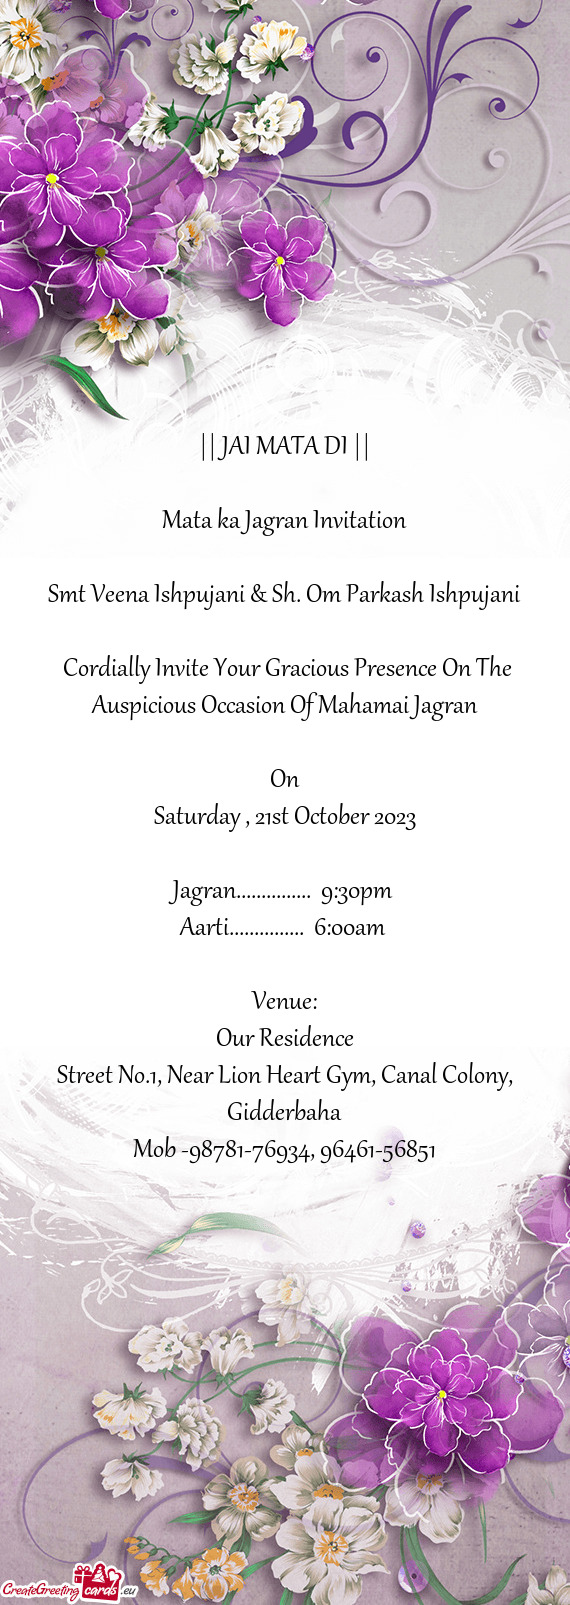 Cordially Invite Your Gracious Presence On The Auspicious Occasion Of Mahamai Jagran